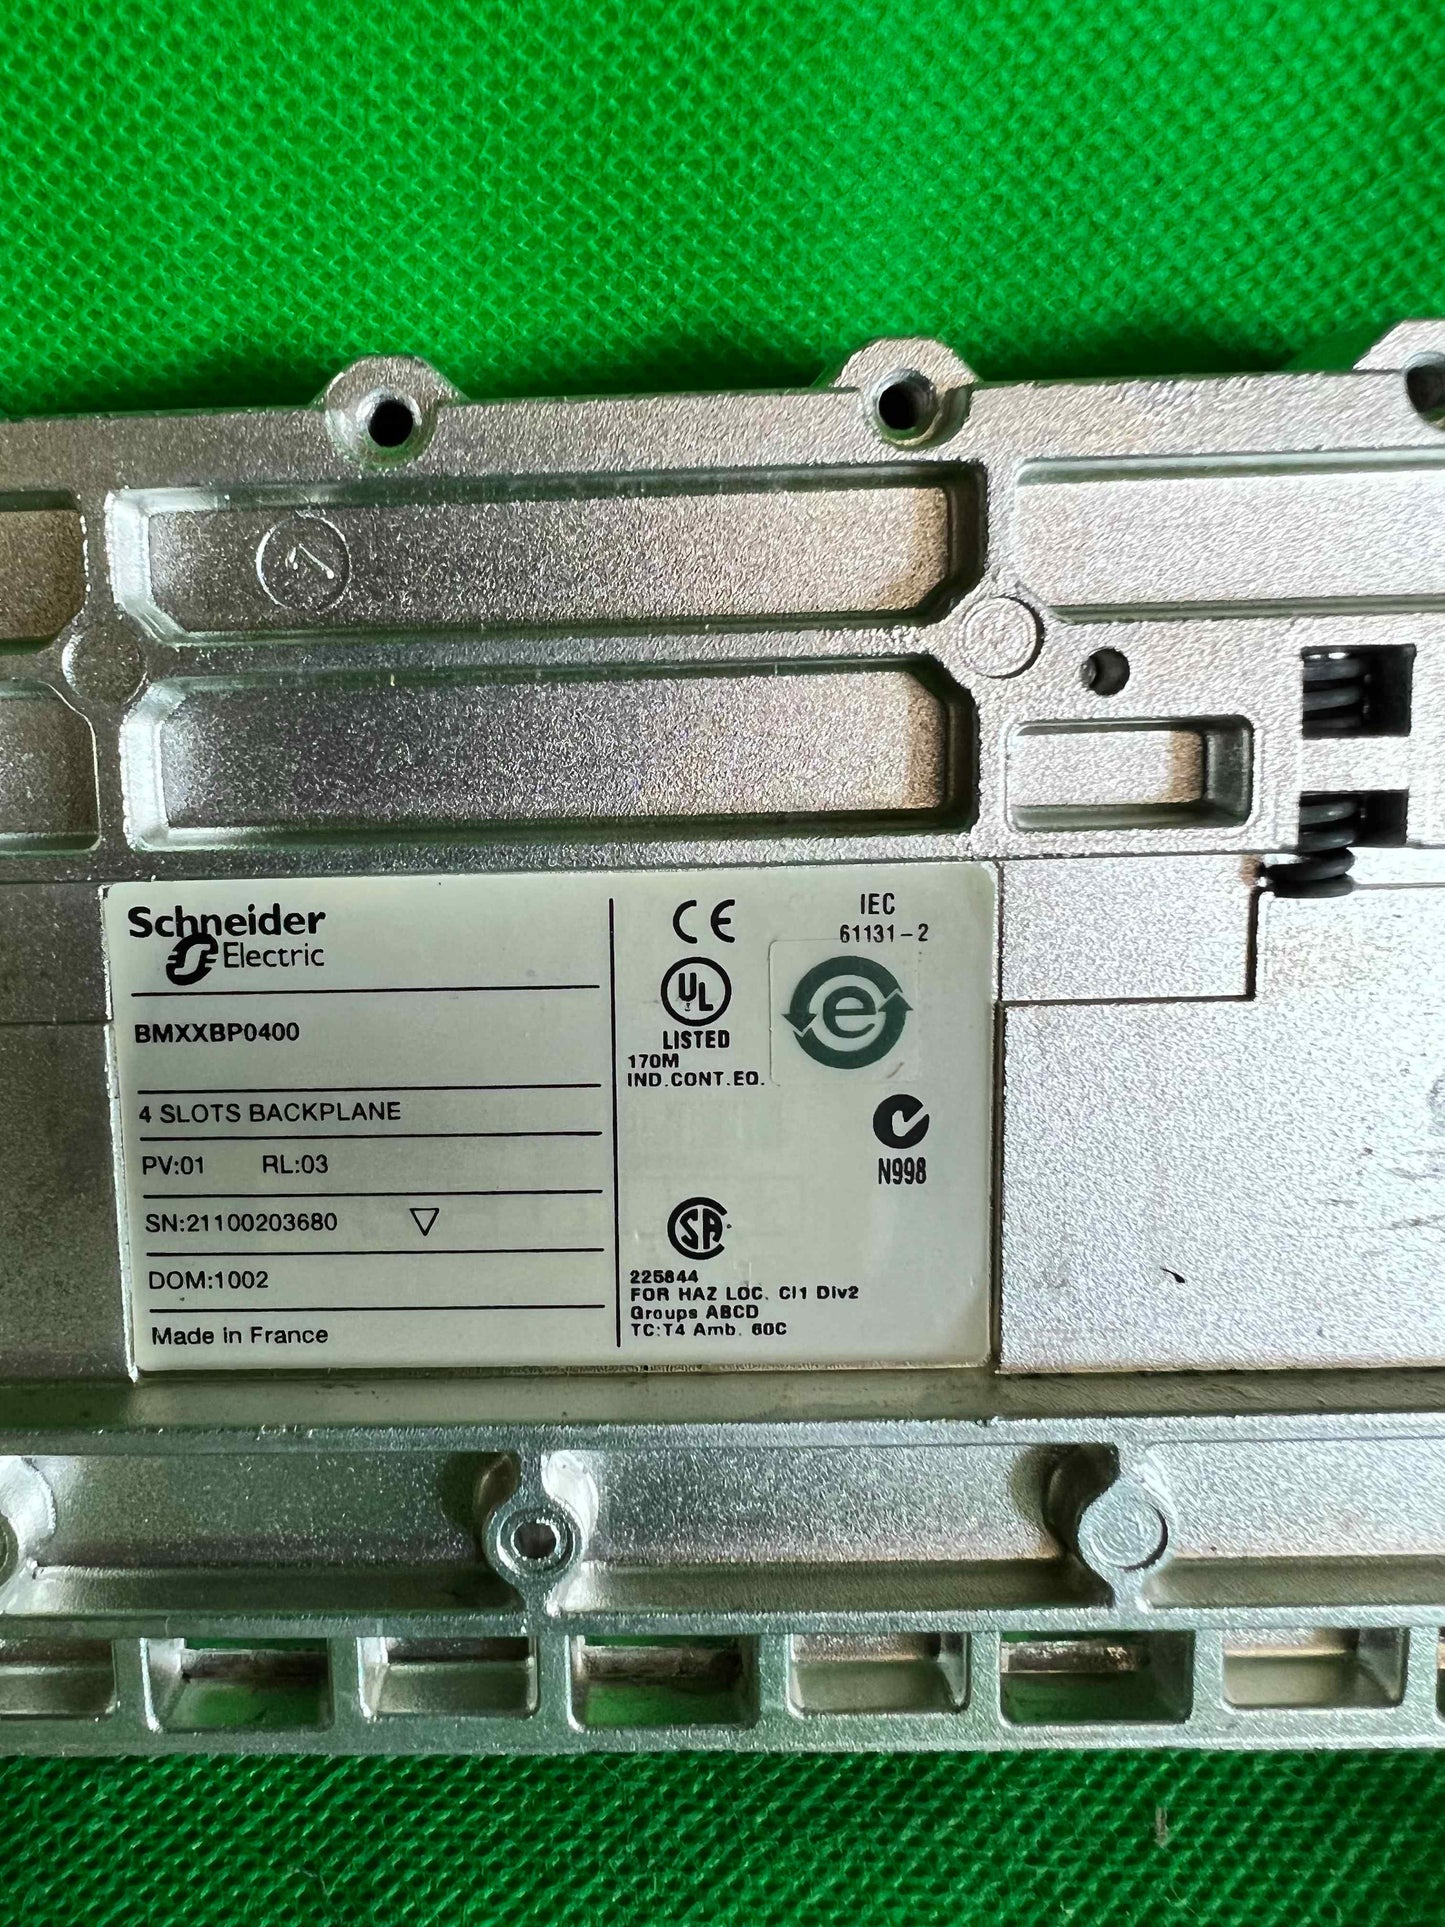 Schneider Electric-BMXXBP0400/BMXXBP0400